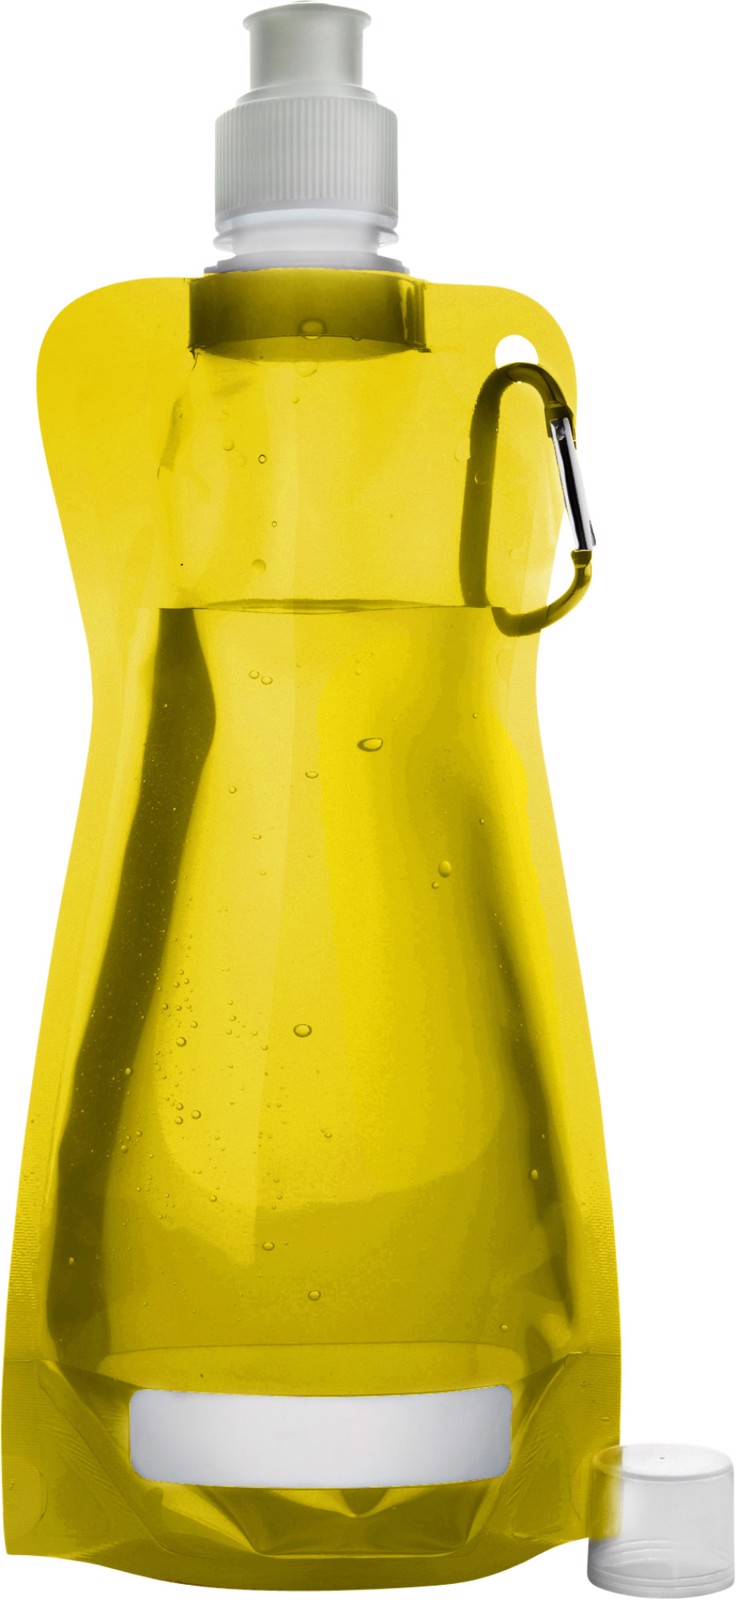 PP bottle - Yellow